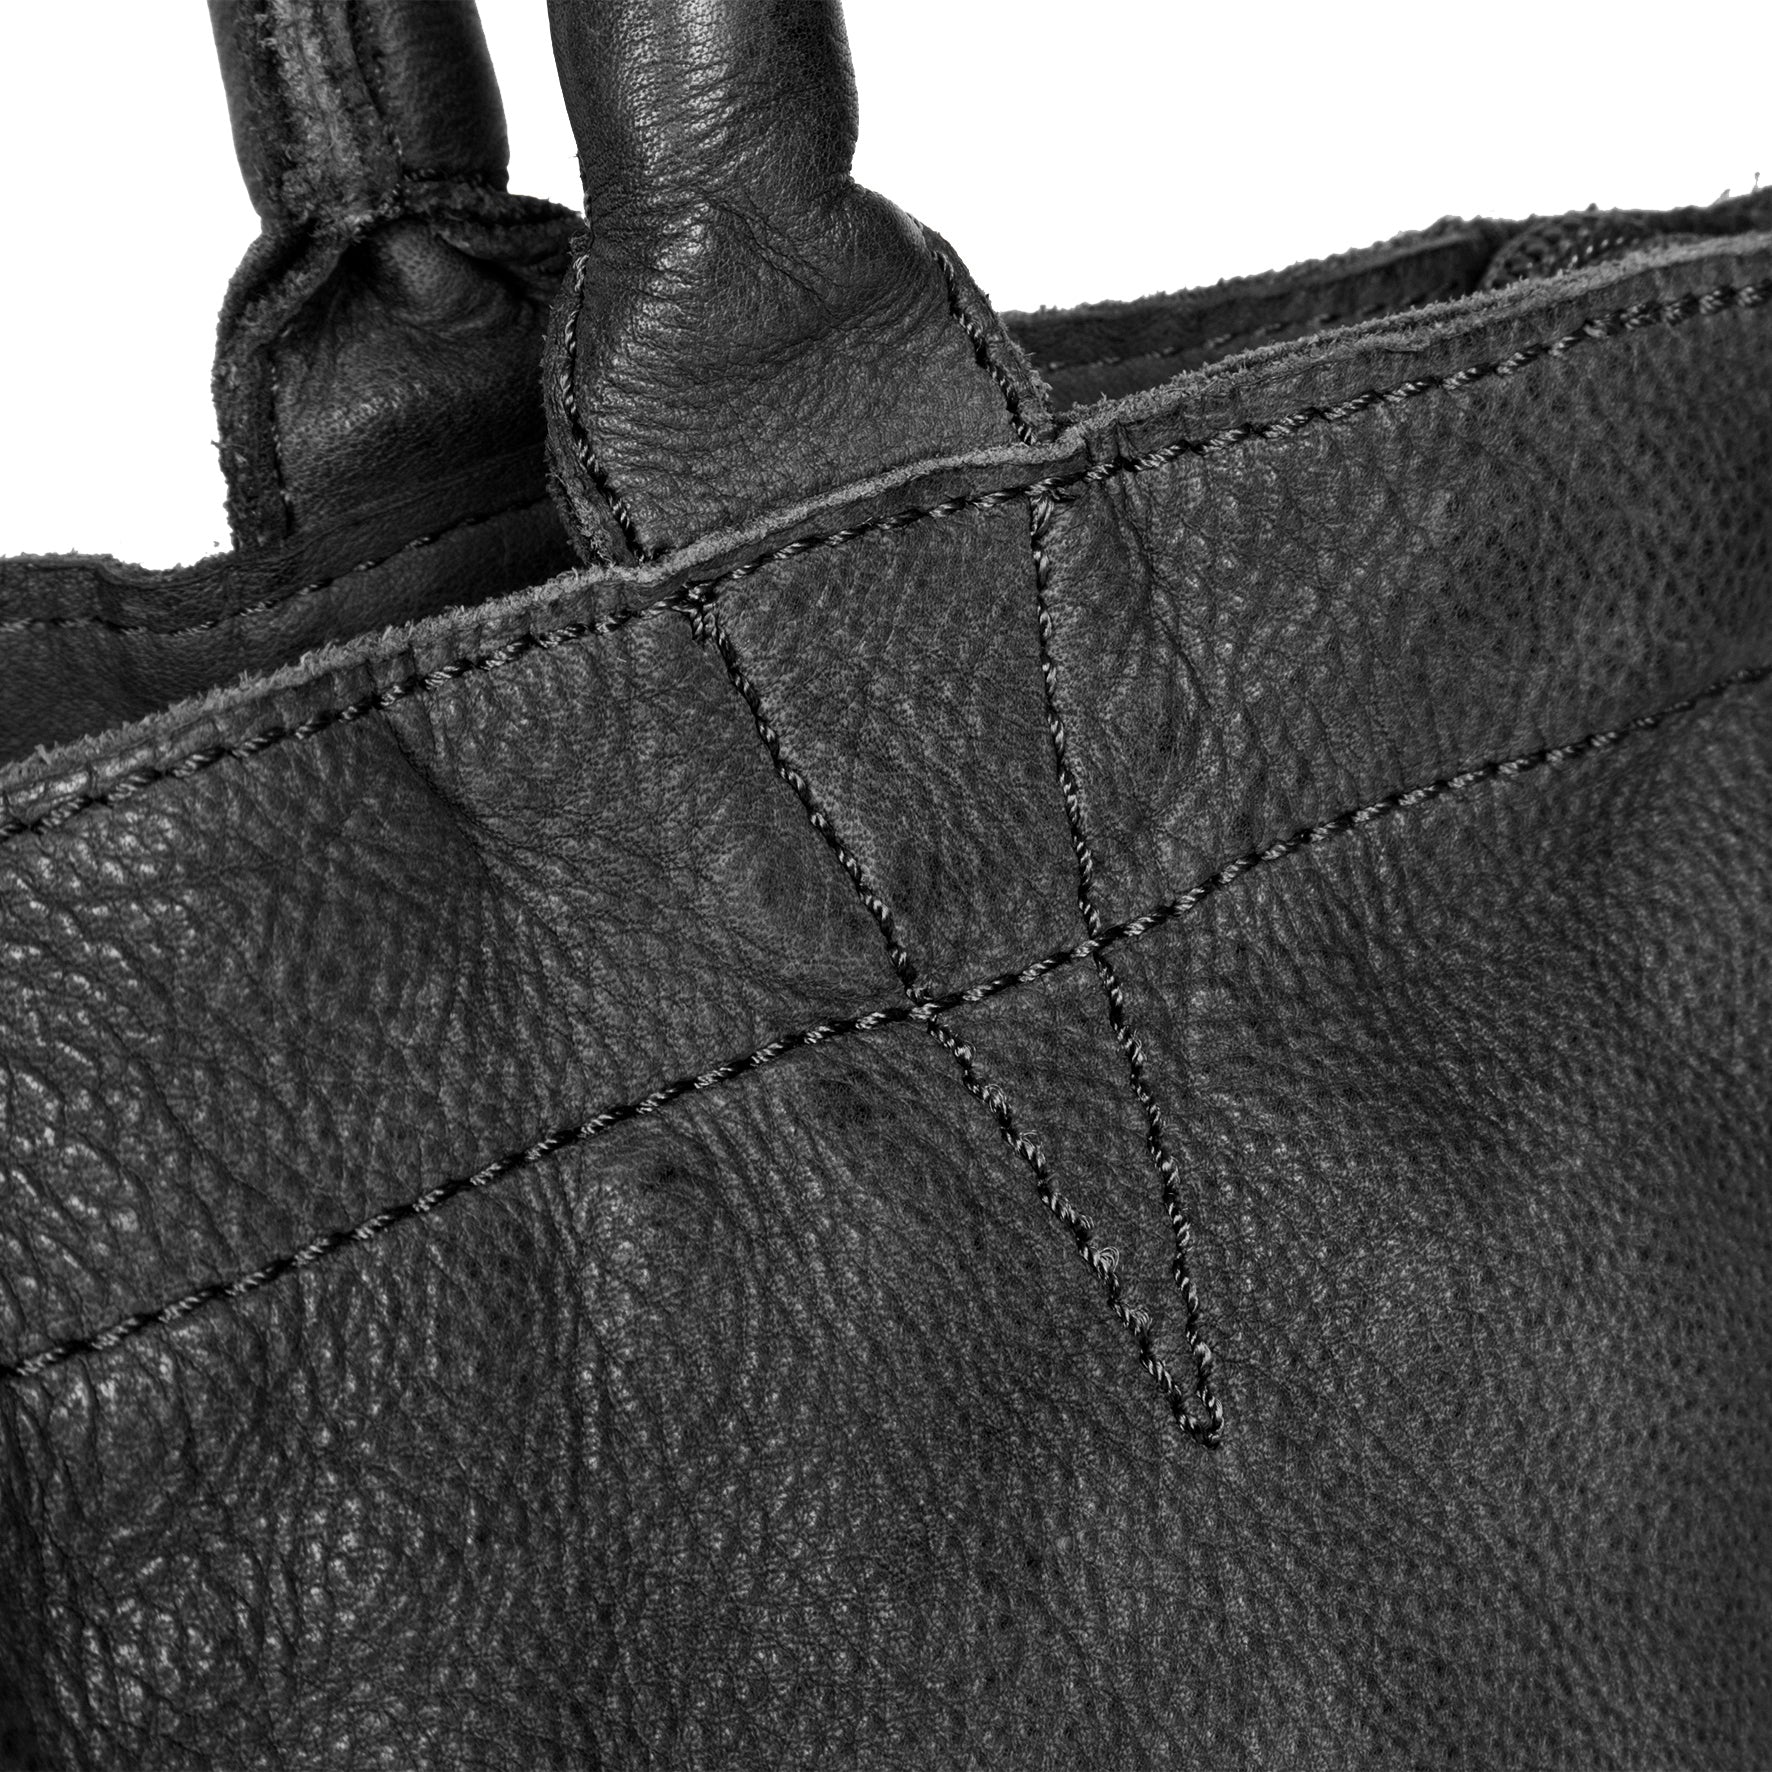 "Amber" Black shopper 32x8x35cm - Laure Bags and Travel